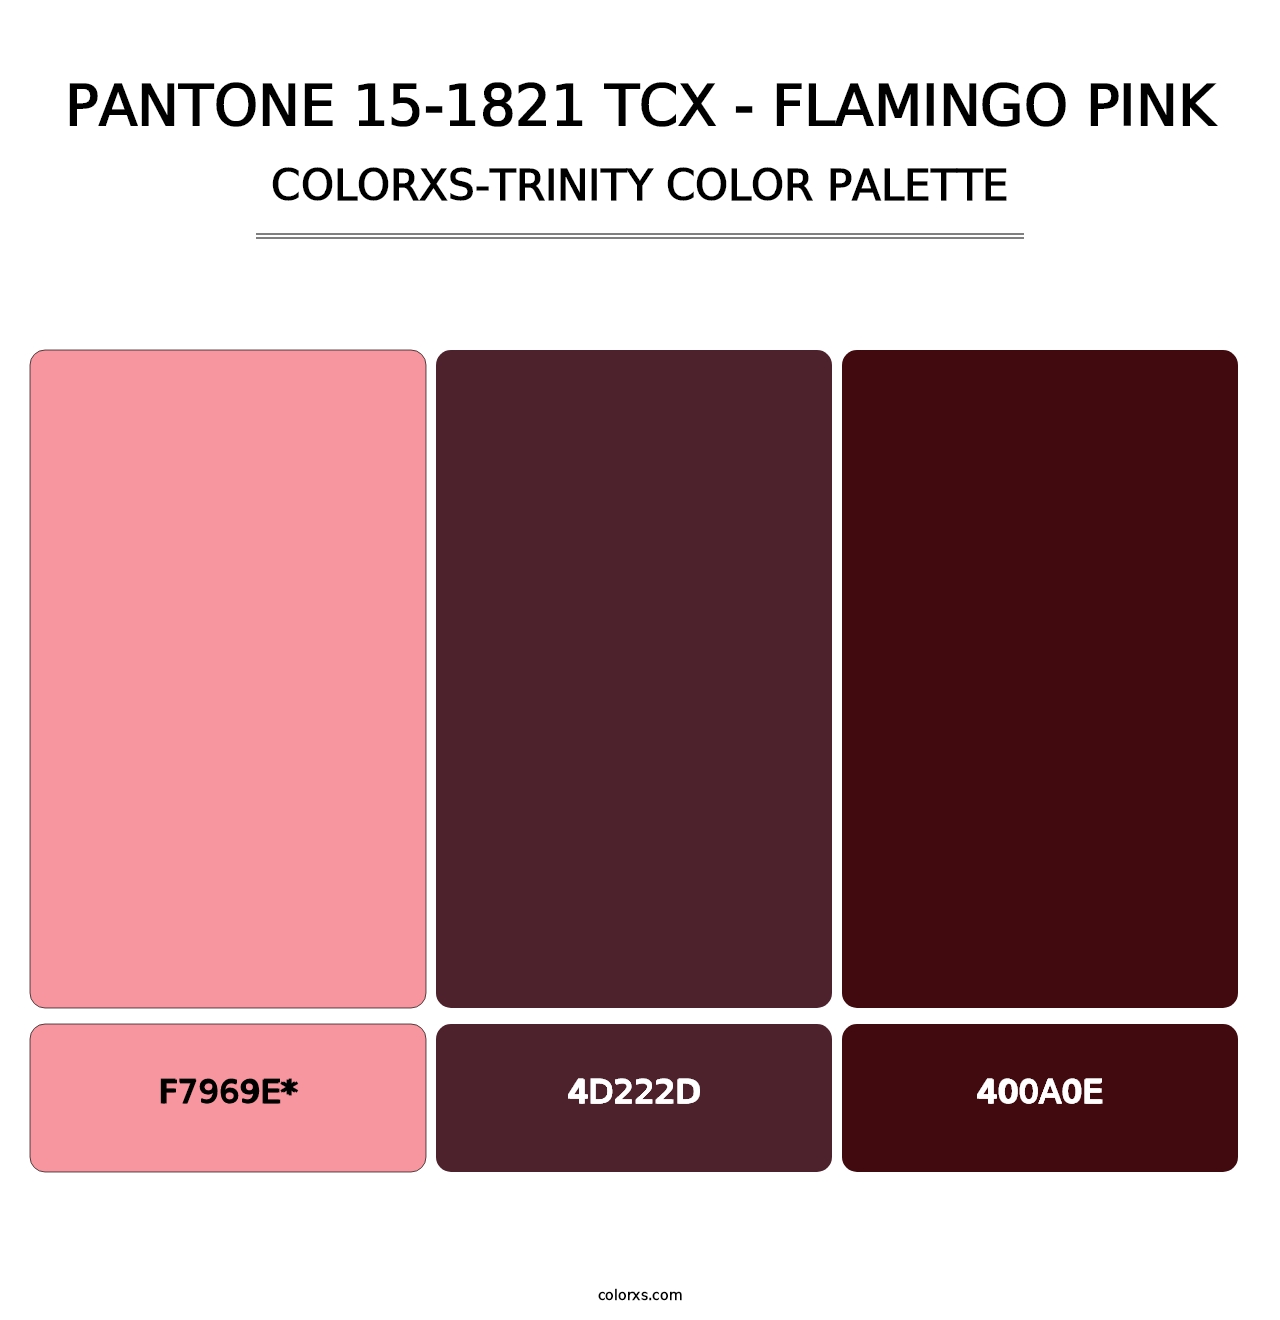 PANTONE 15-1821 TCX - Flamingo Pink - Colorxs Trinity Palette